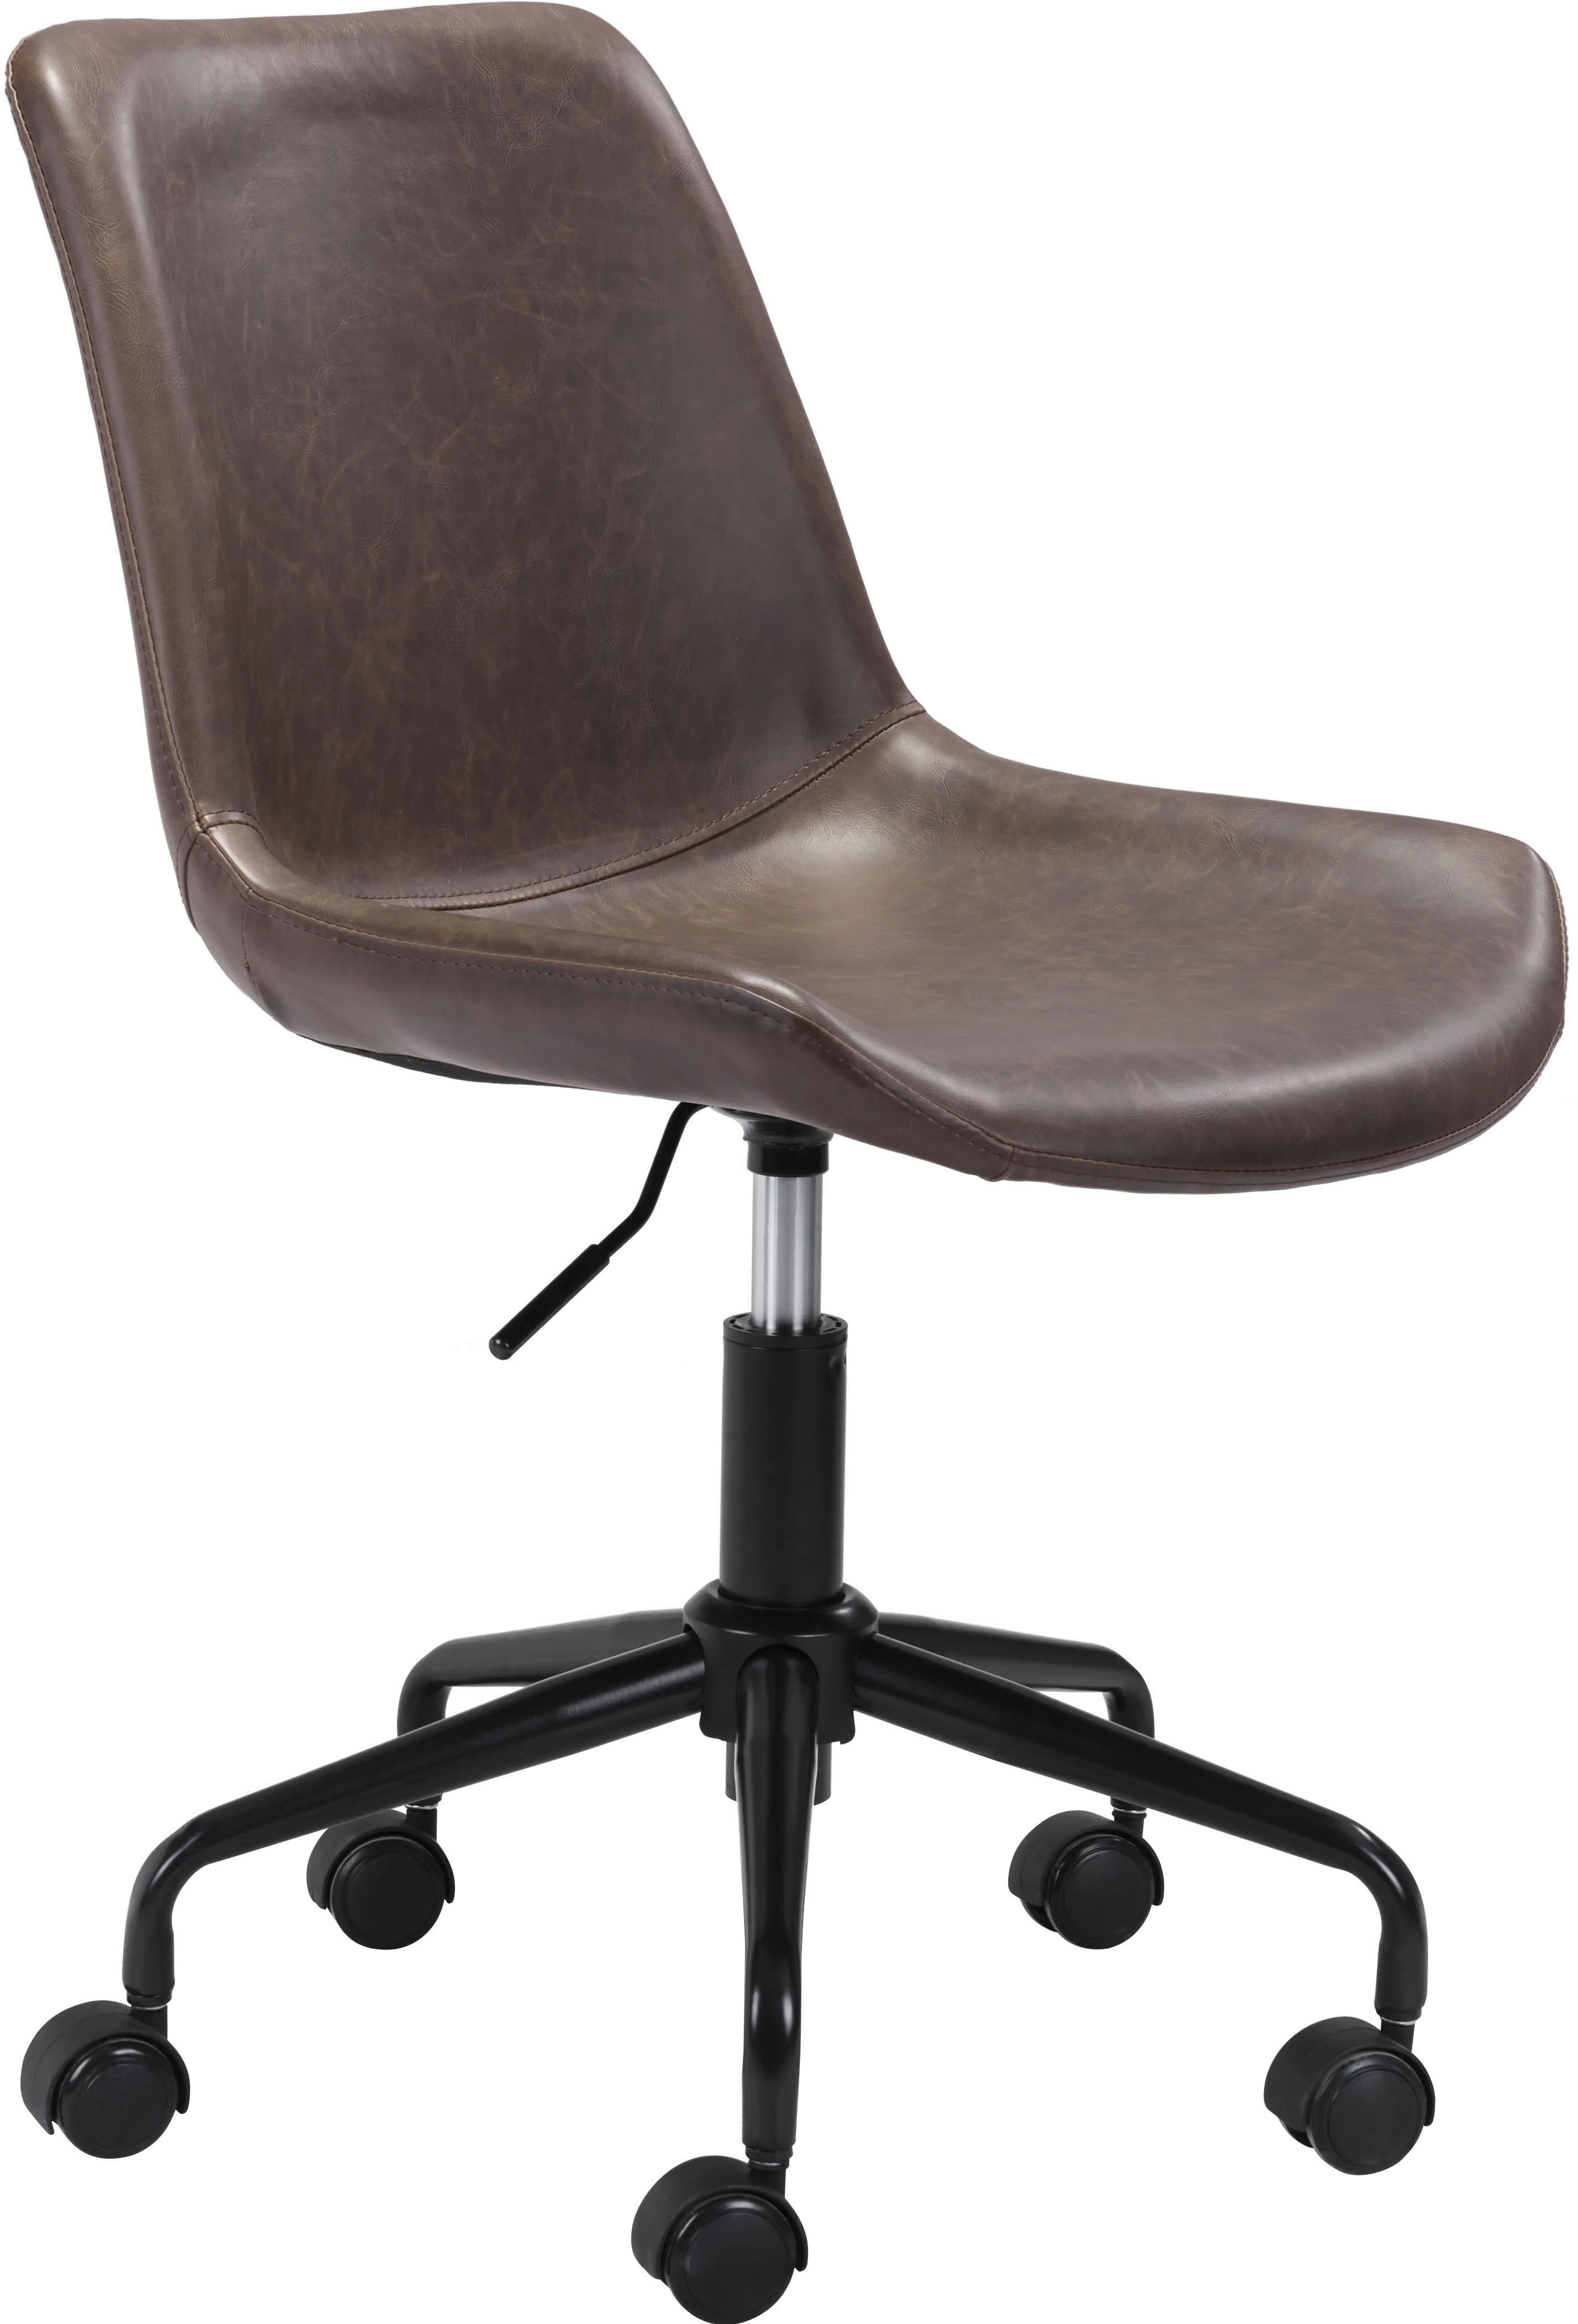 Mid-century Modern Brown Office Chair